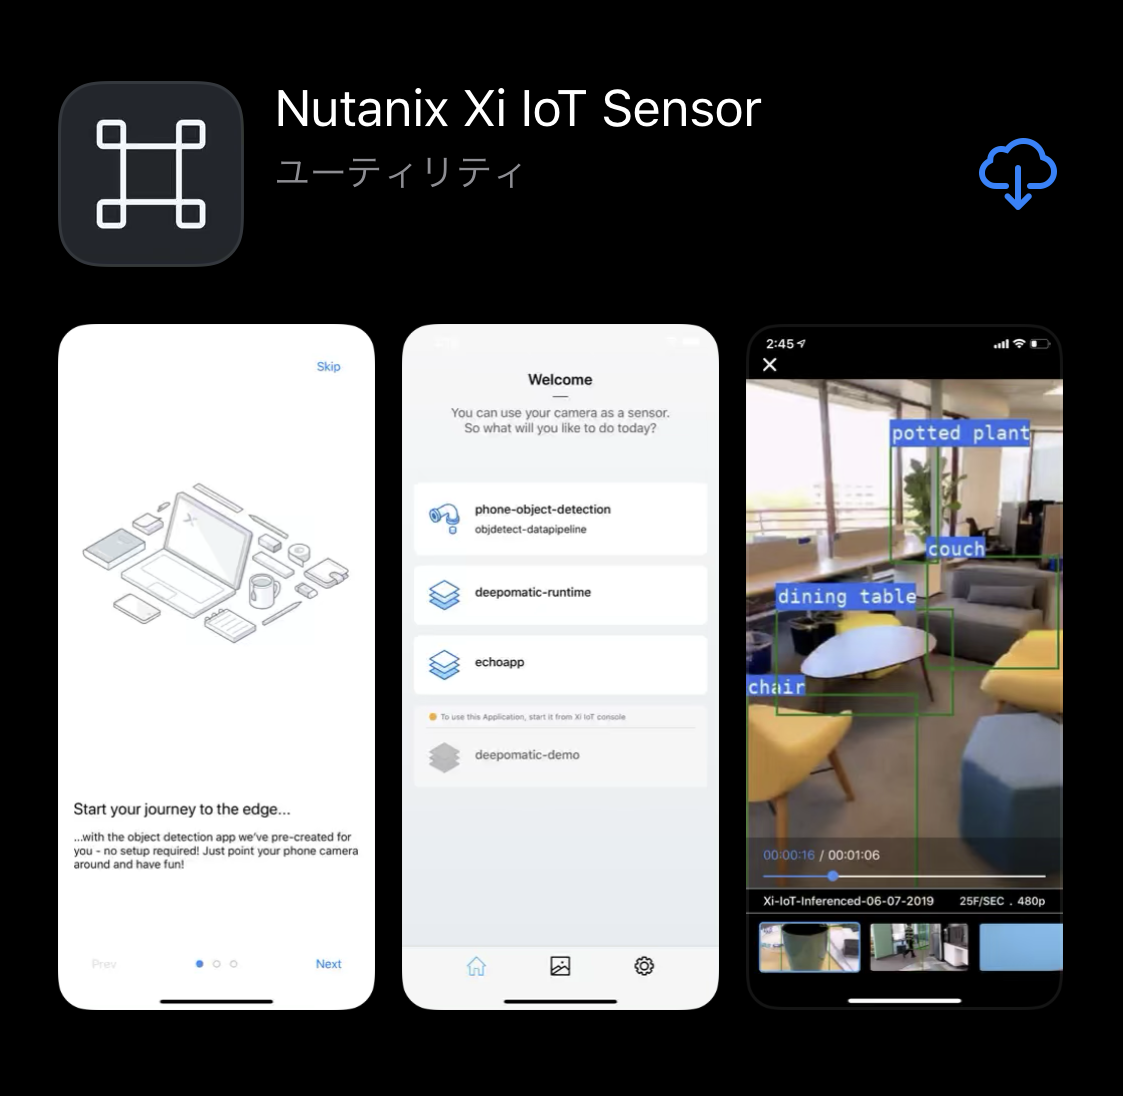 App Store Xi IoT Sensor